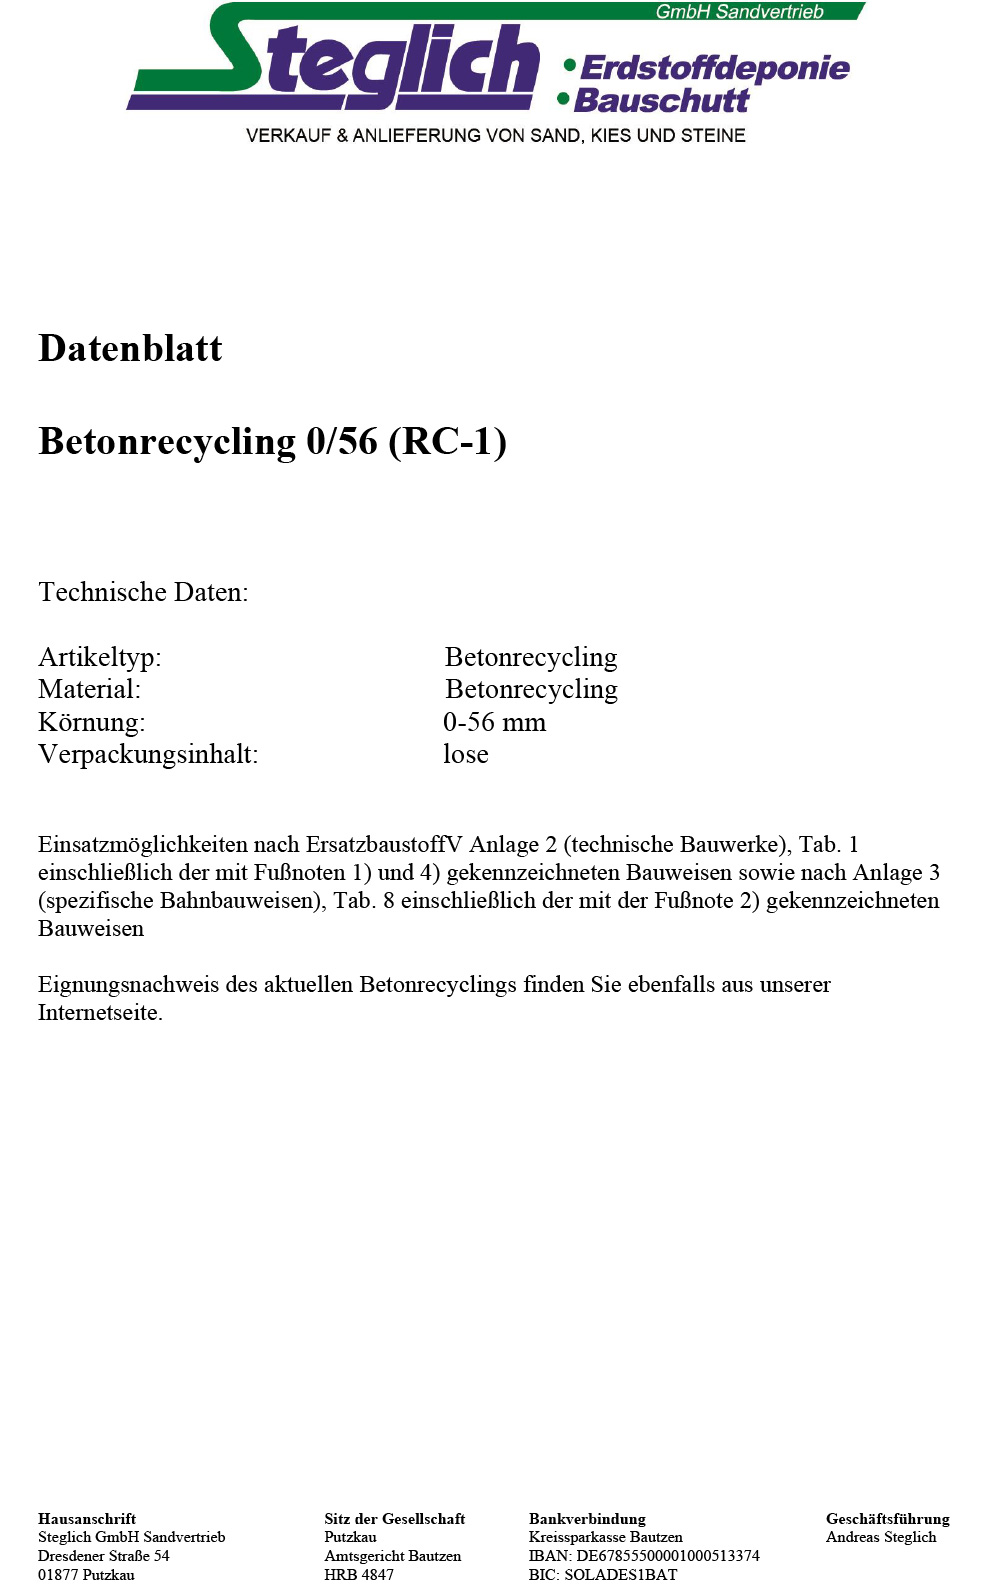 Datenblatt-Betonrecycling-RC-1